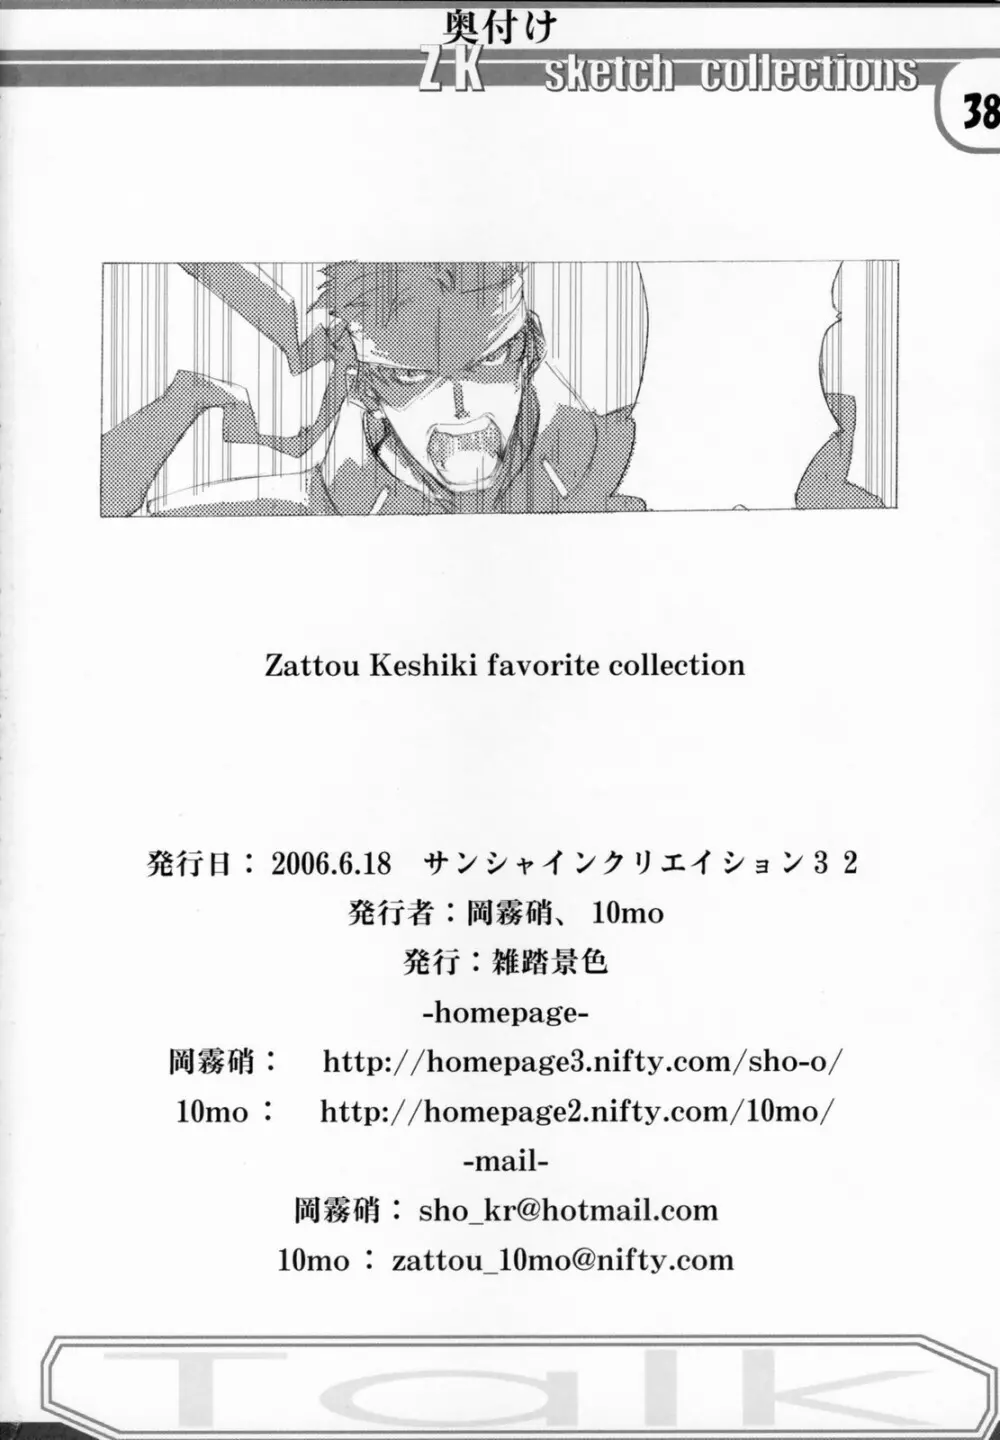 Zattoukeshi Favorite Collection - page37